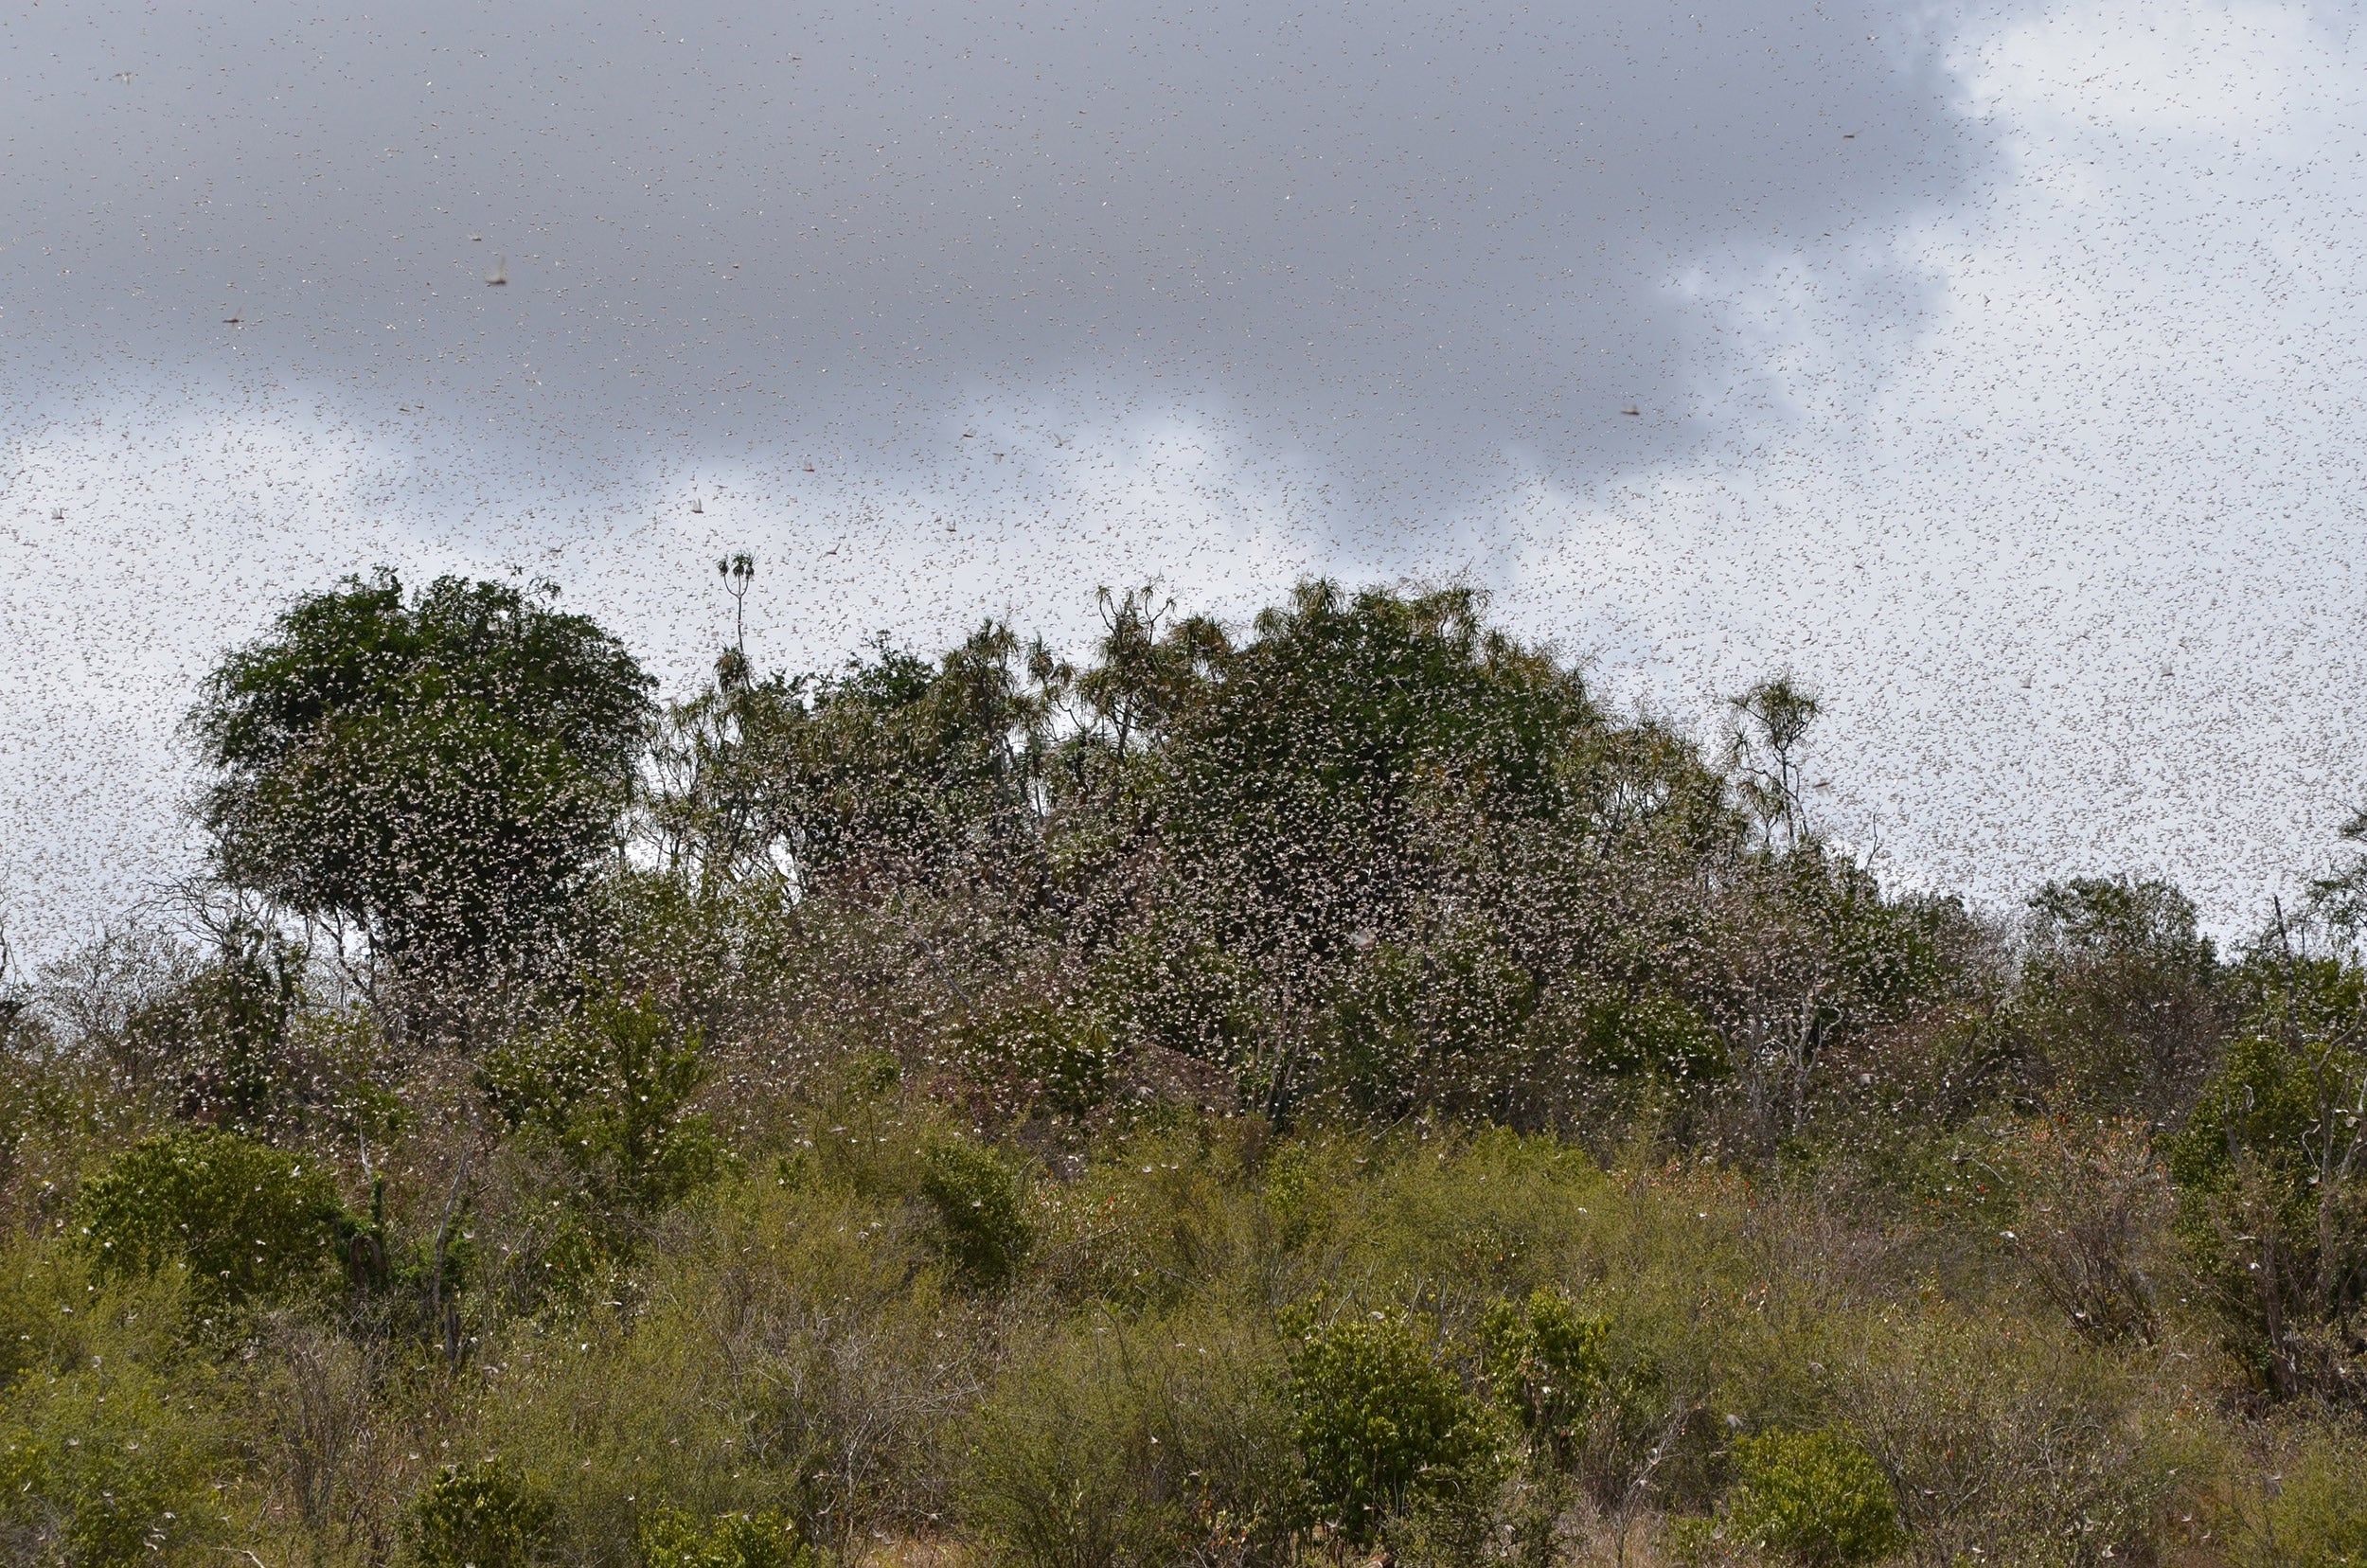 Locusts filling the sky.